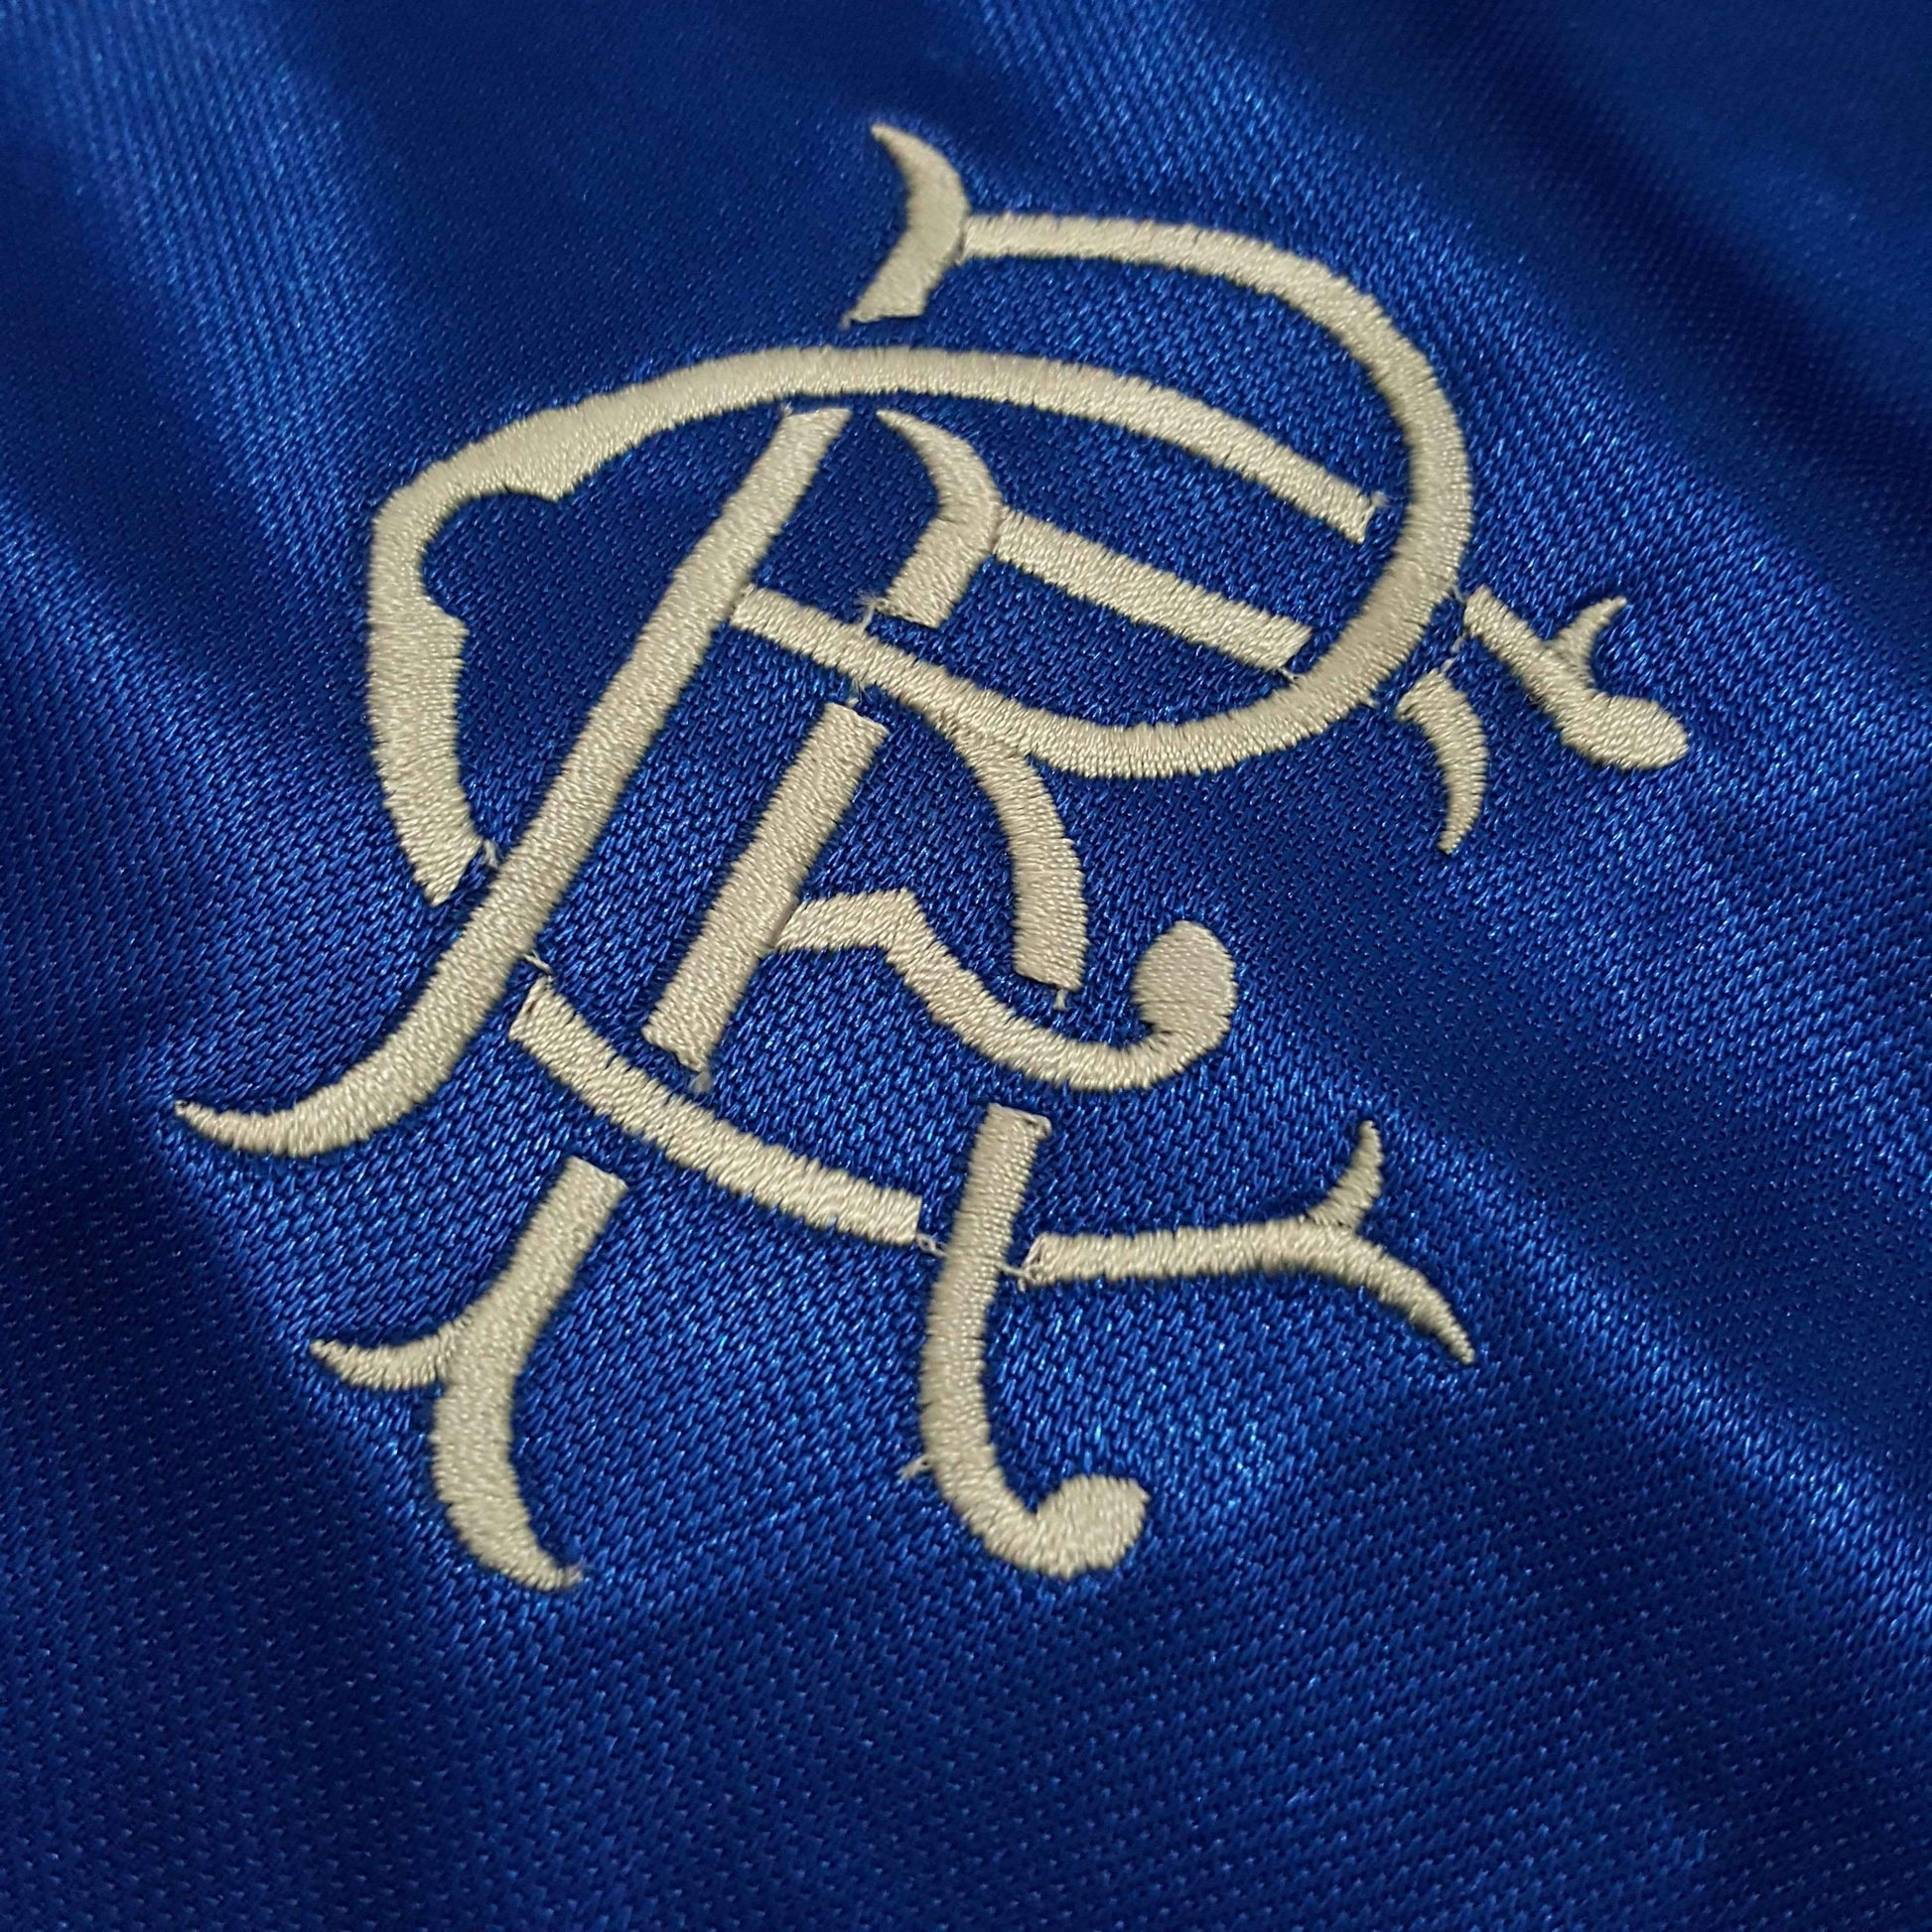 1985-87 Glasgow Rangers Home Shirt - ClassicFootballJersey